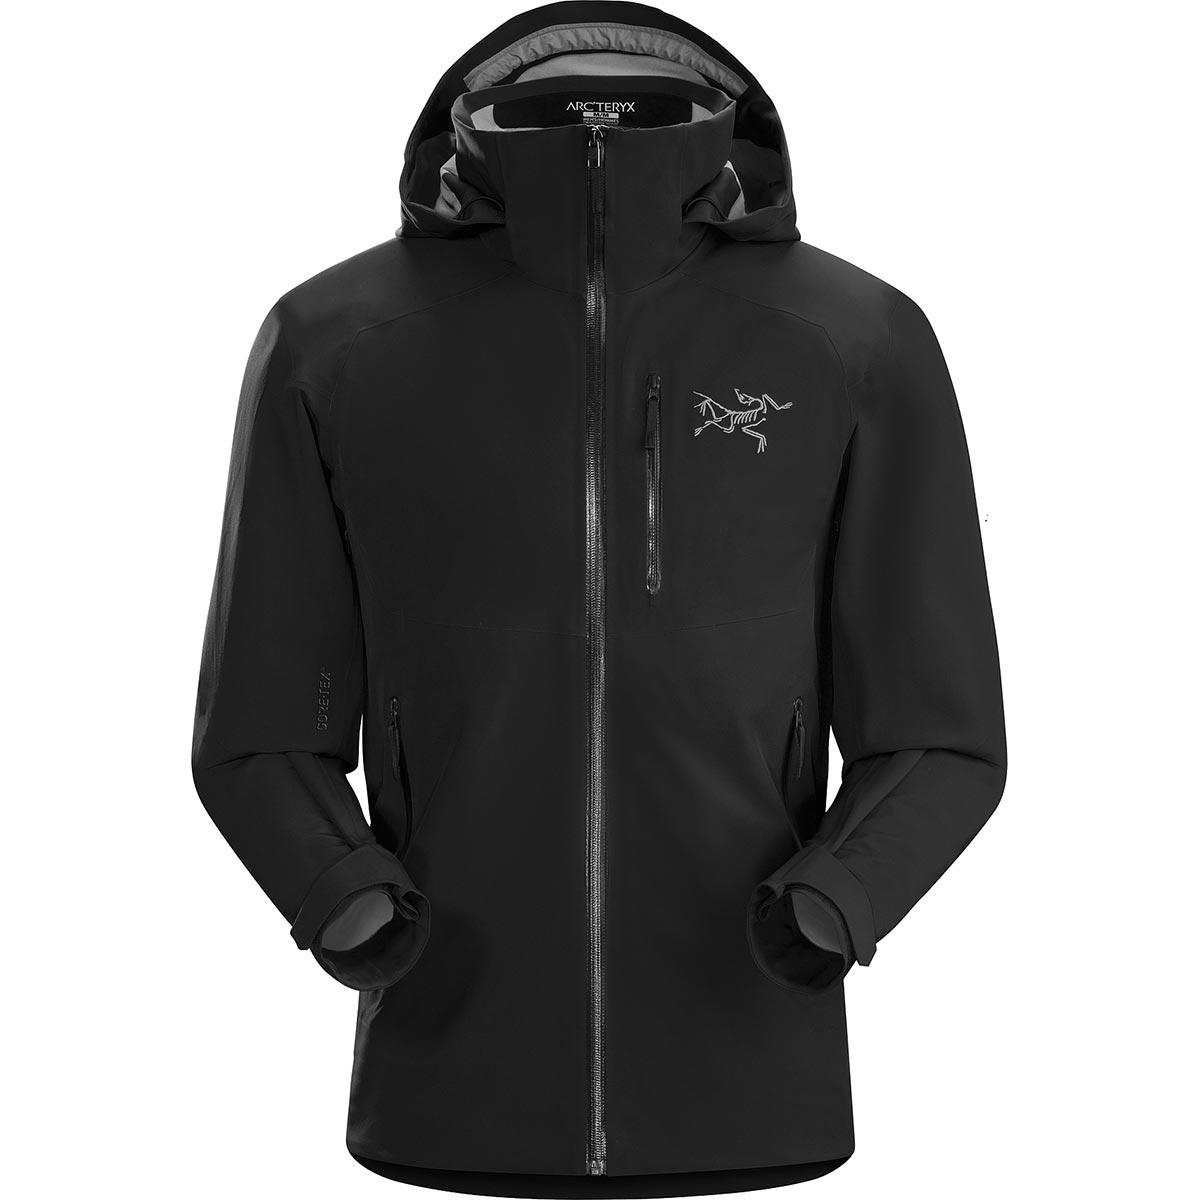 Arc'teryx Cassiar Jacket, men's, discontinued Fall 2018 colors (free ...